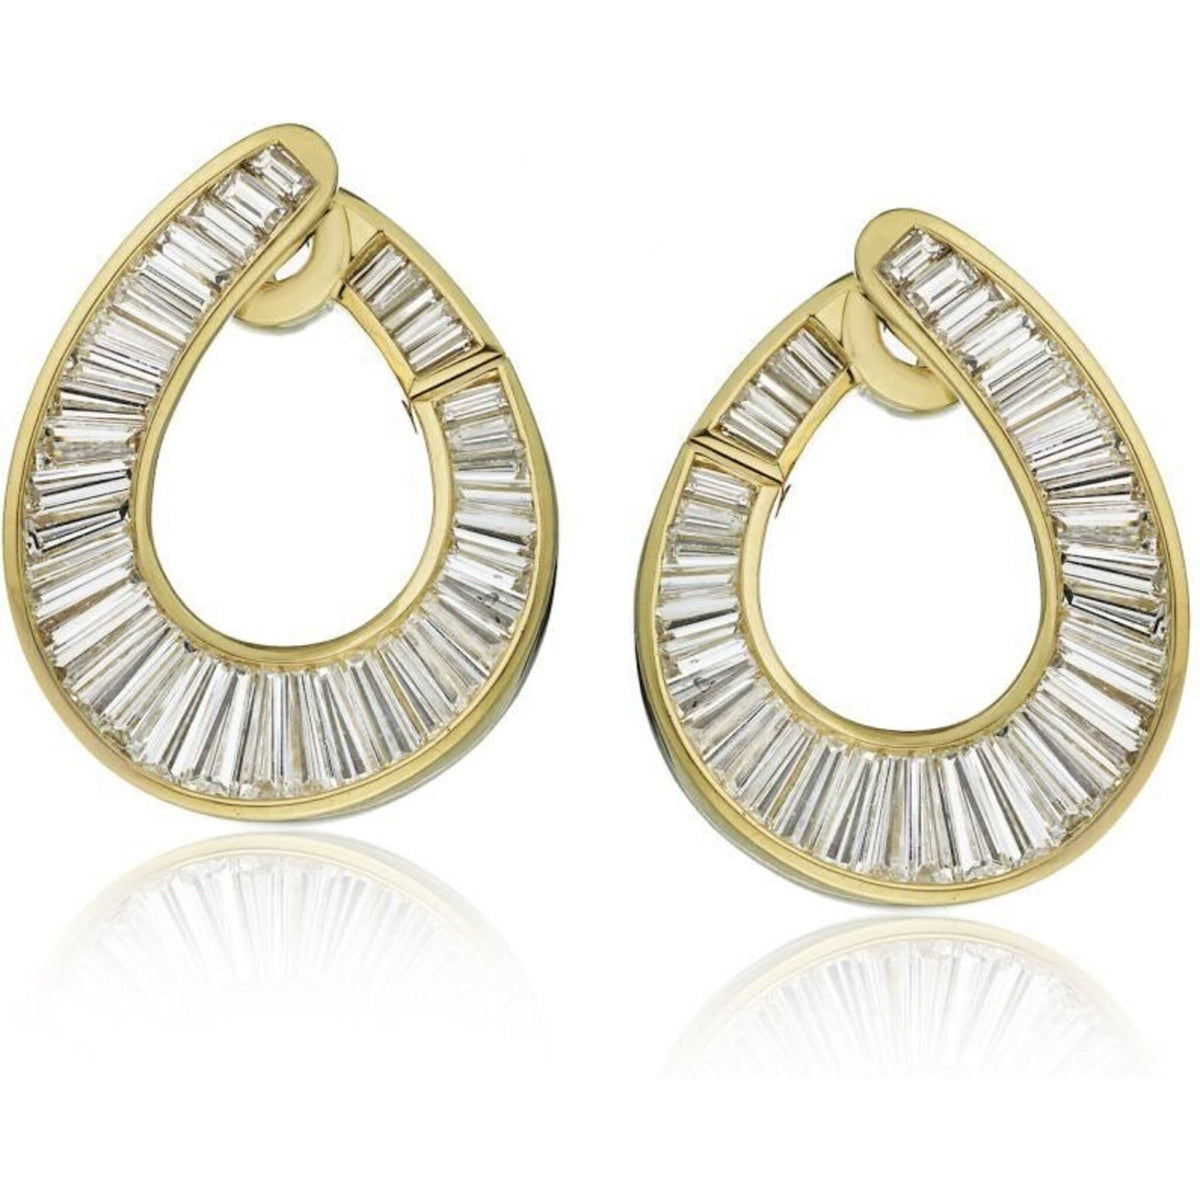 Oscar Heyman - 18K Yellow Gold 7 Carat Baguette Diamond Earrings